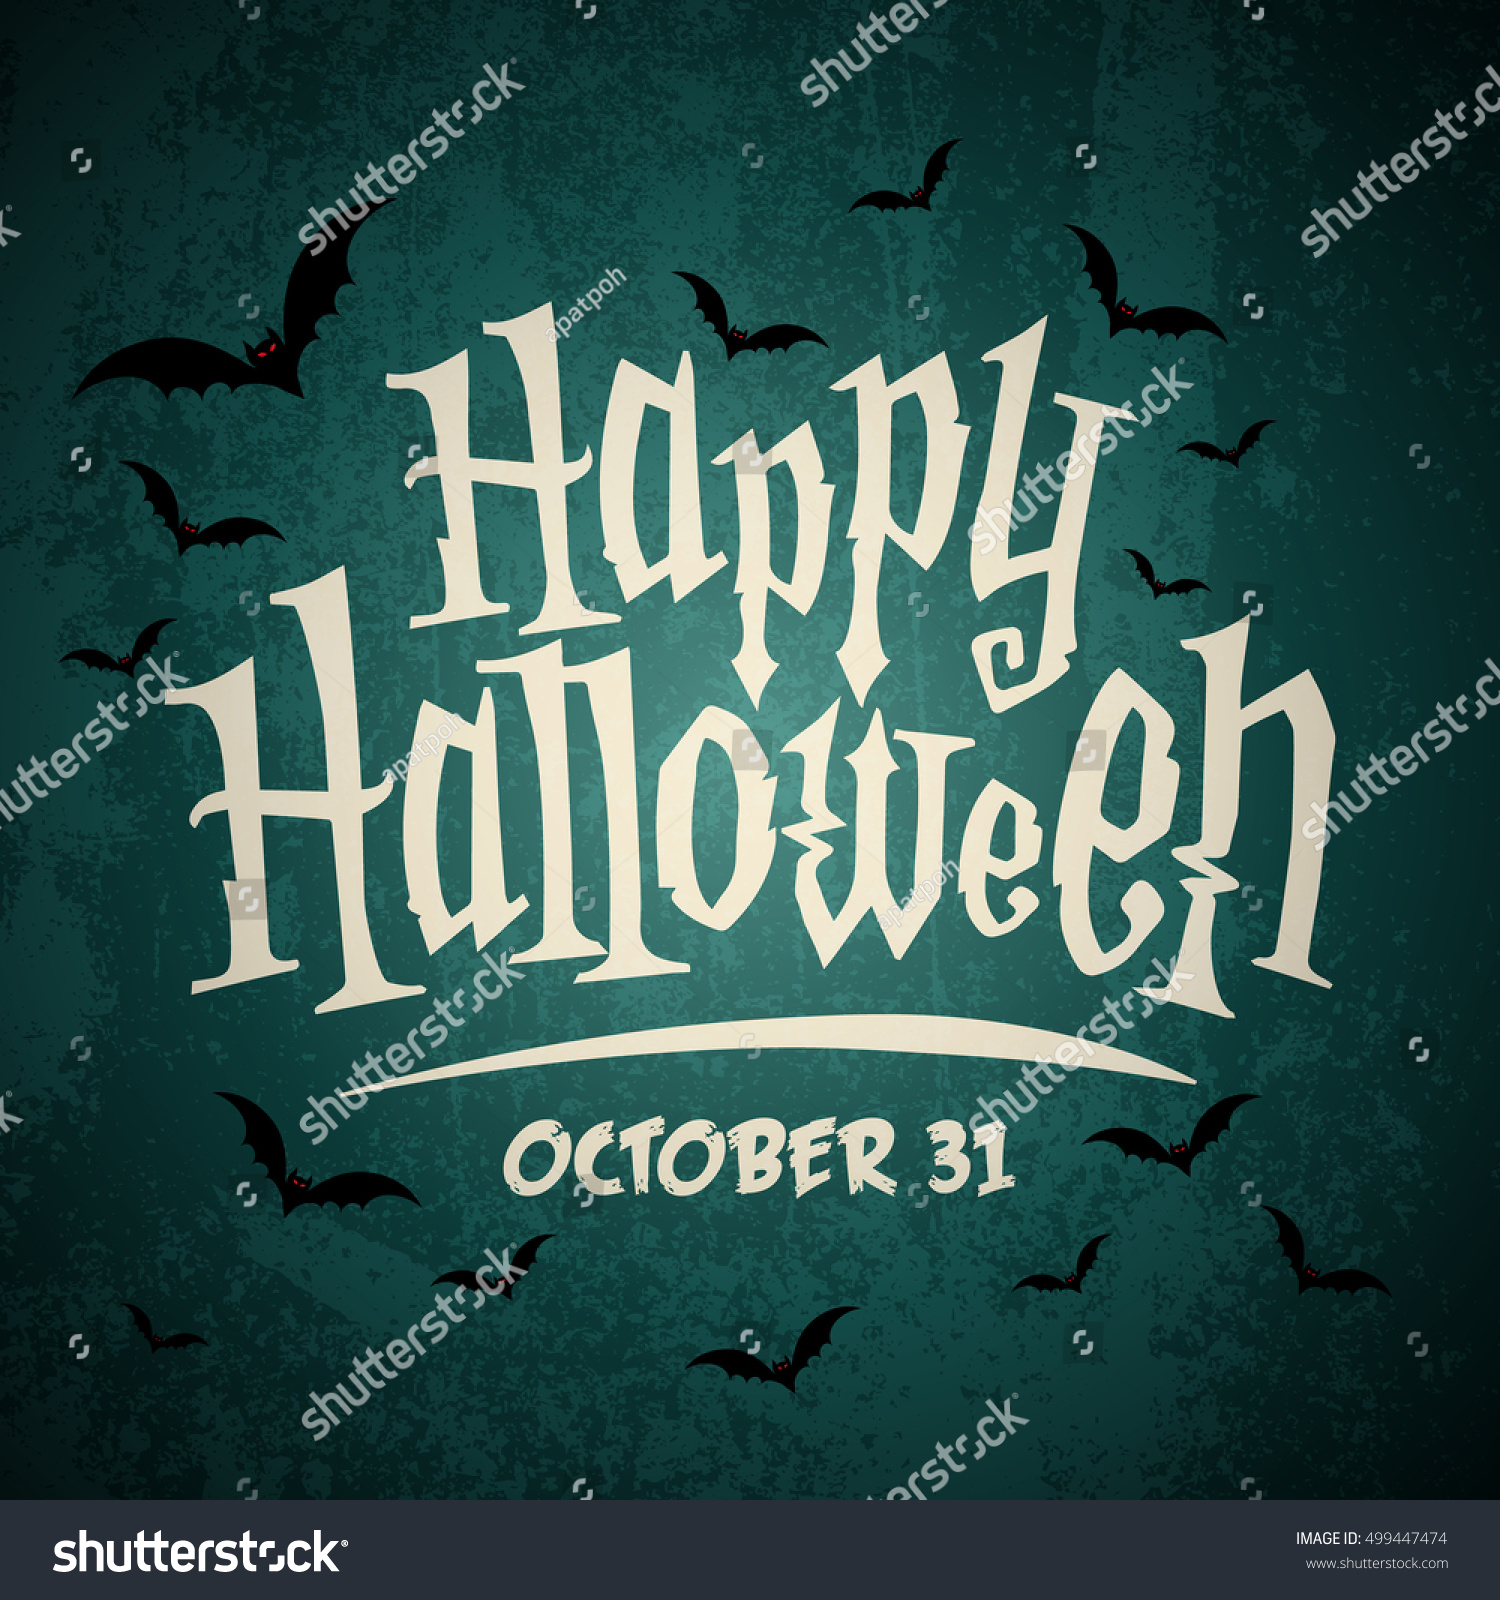 Halloween Vector Illustration. - 499447474 : Shutterstock